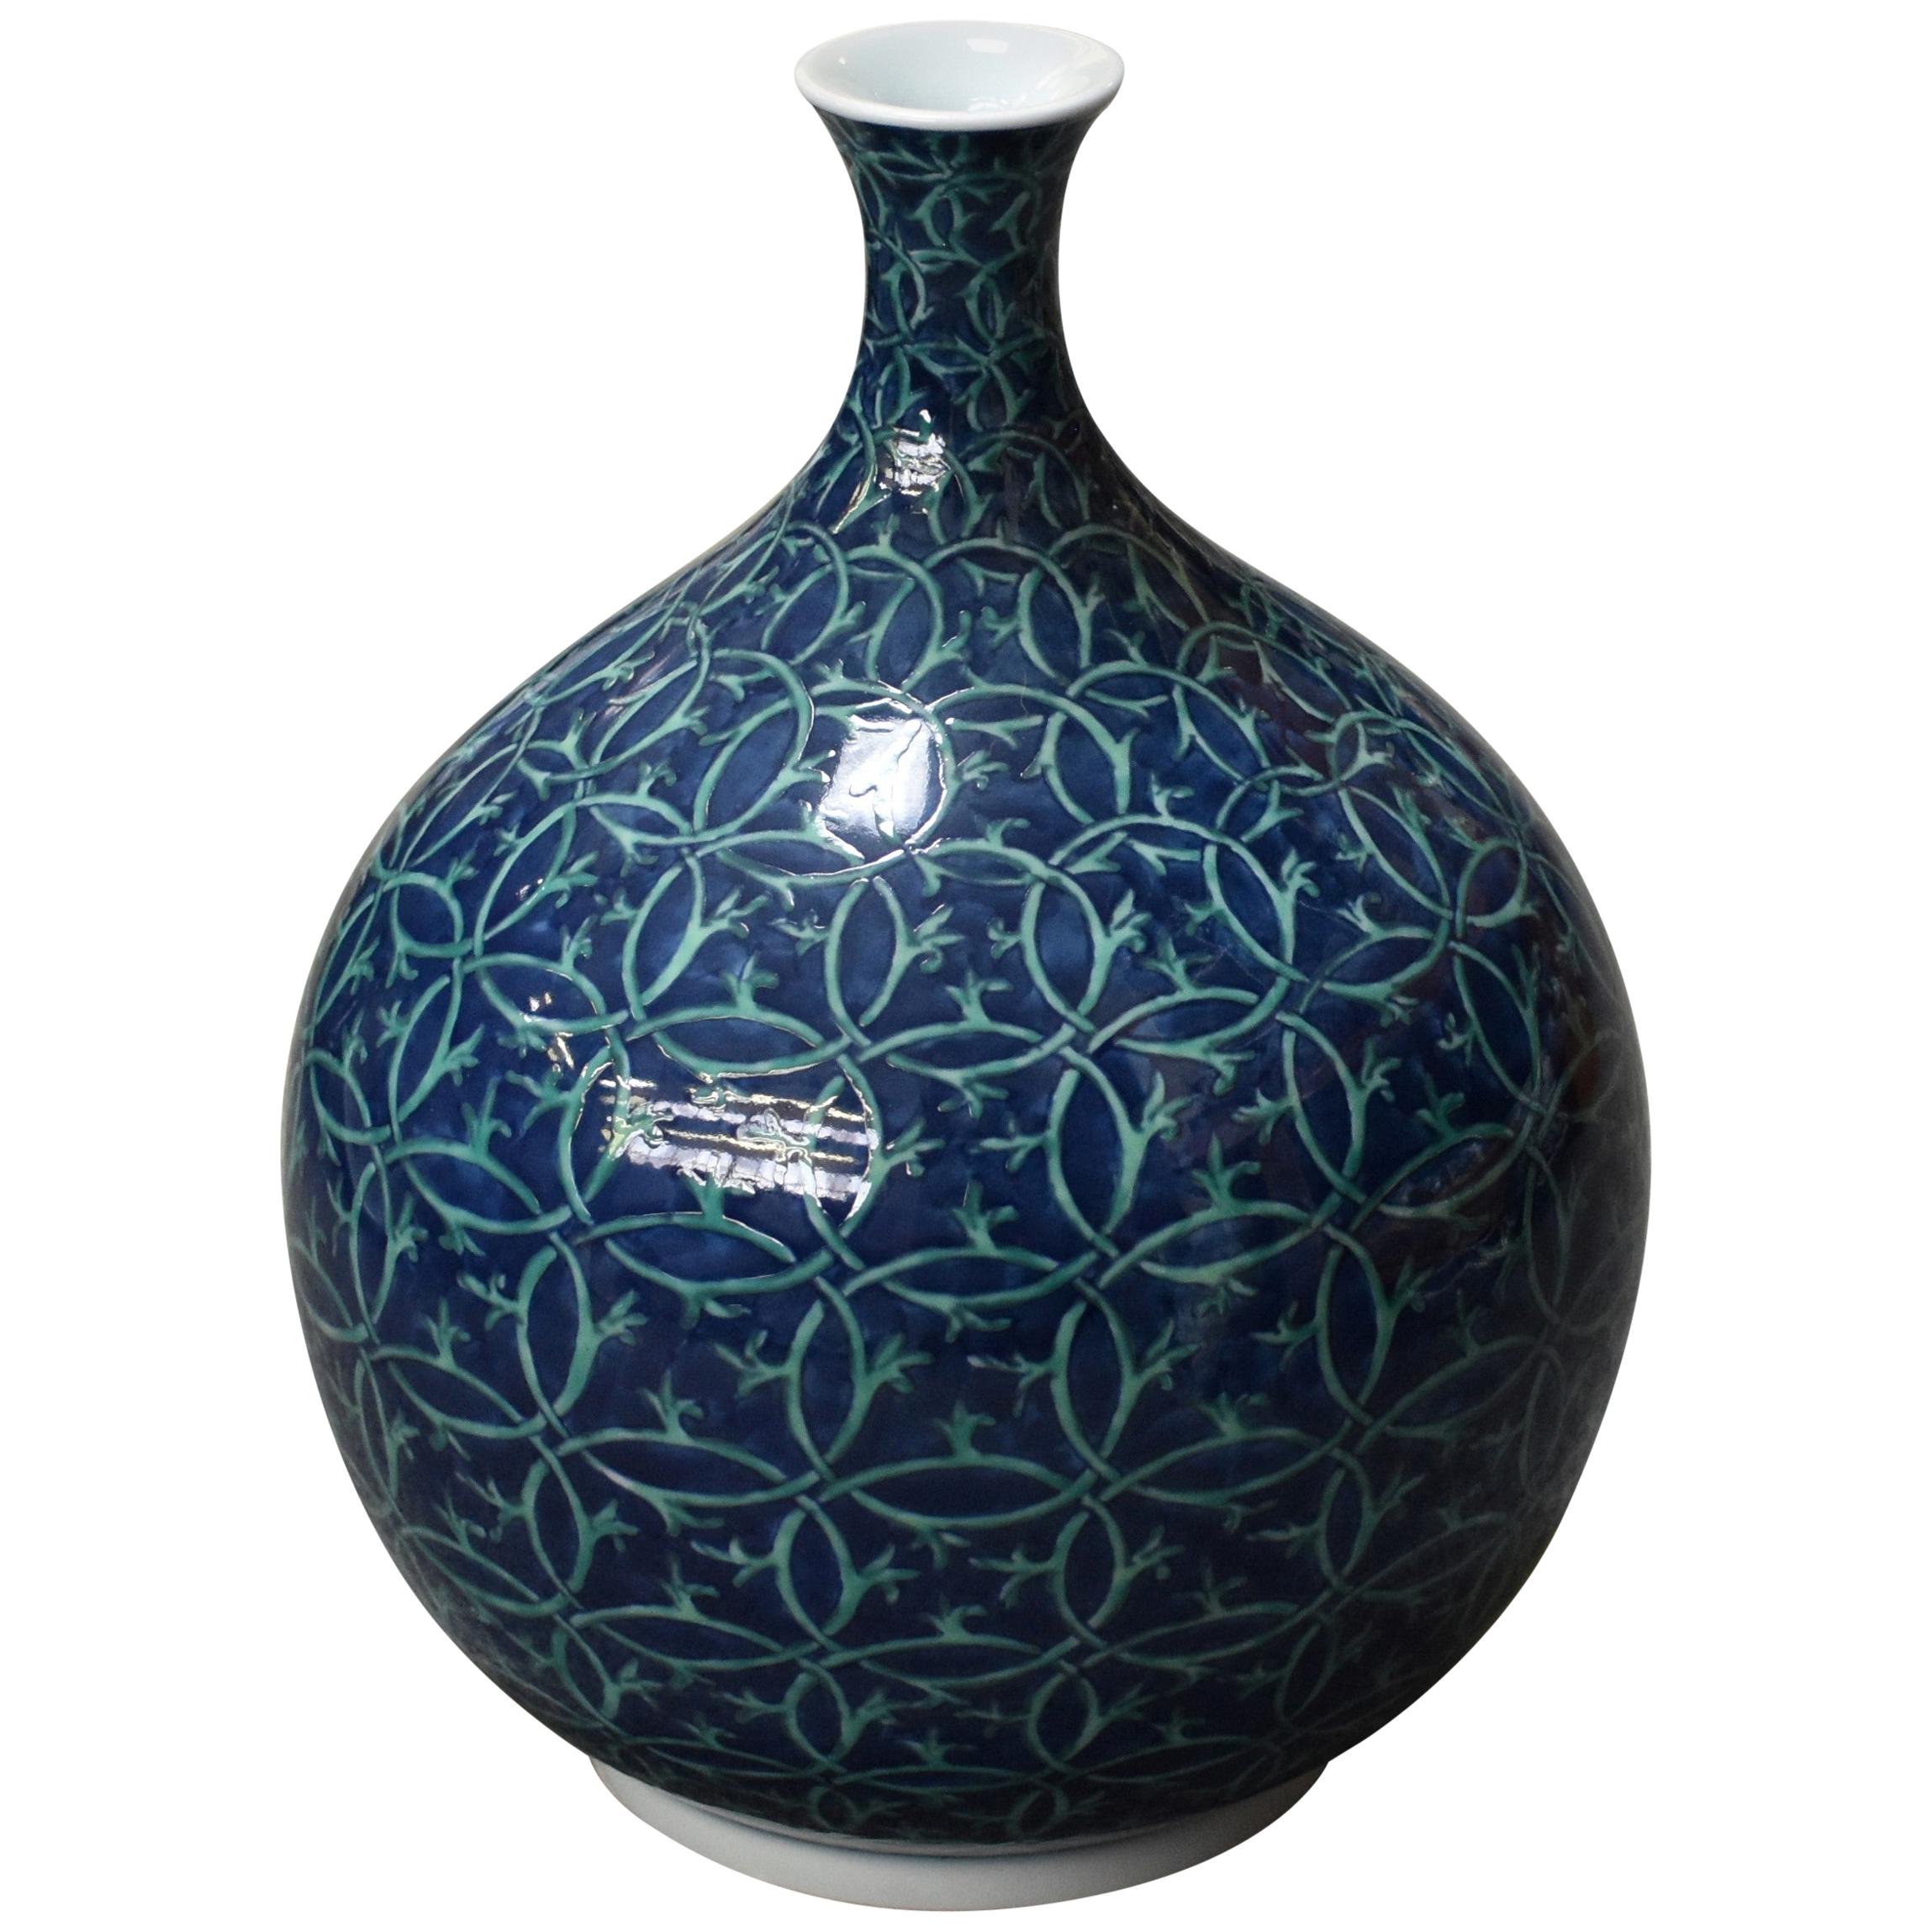 Japanese Blue Porcelain Vase by Master Artist